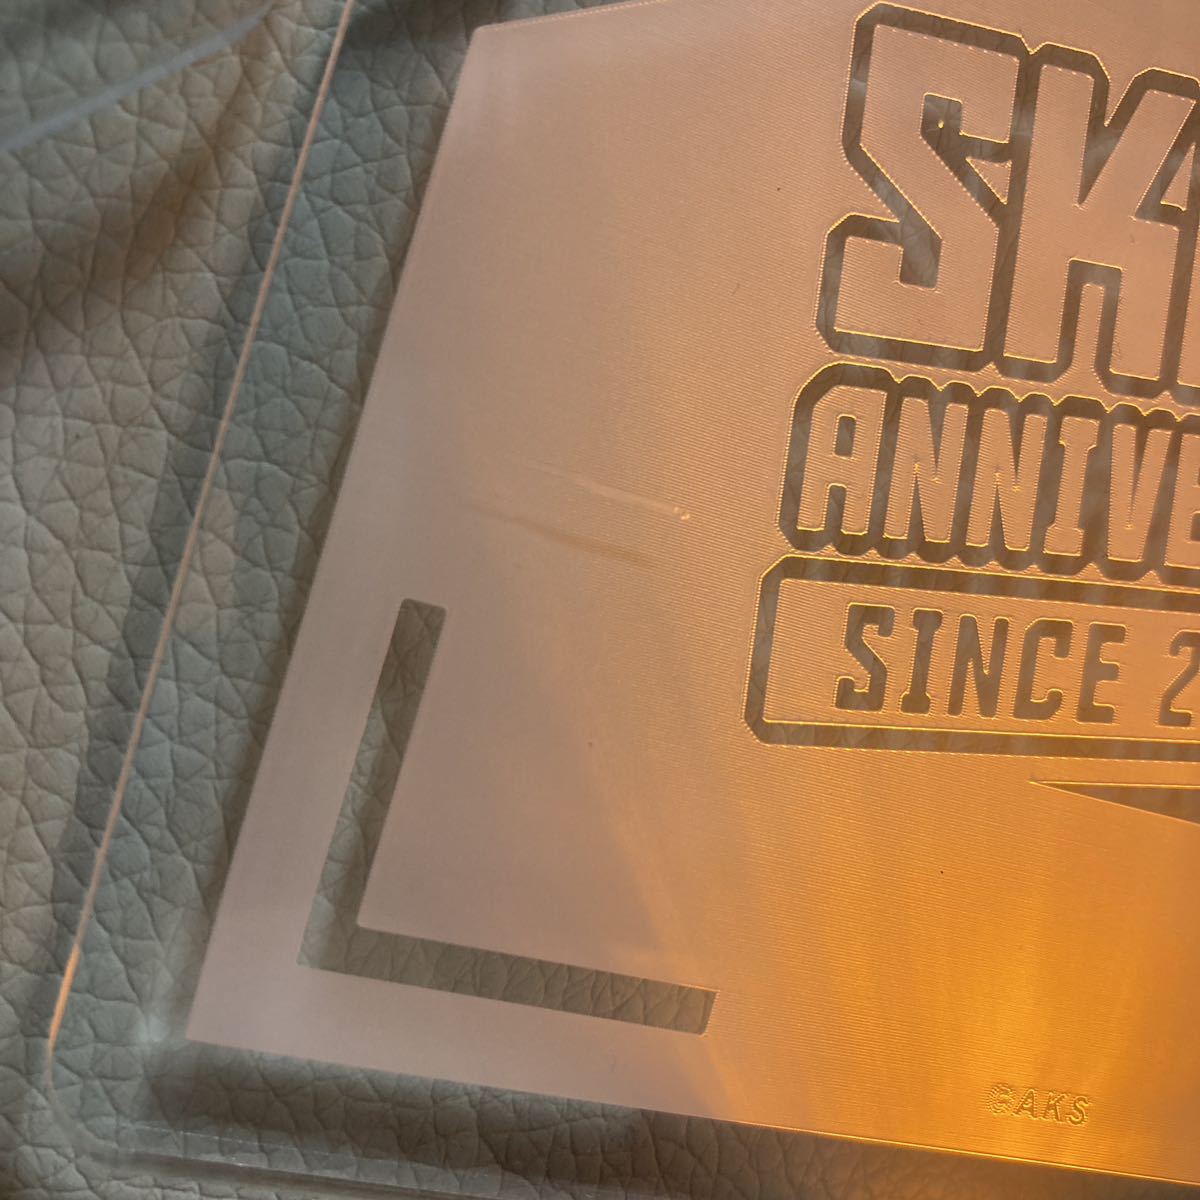 SKE48 8th Anniversary 8 годовщина свет тонкий фонарик 2008 свет концерт lai яркий SKE48 товары SKE48 свет 